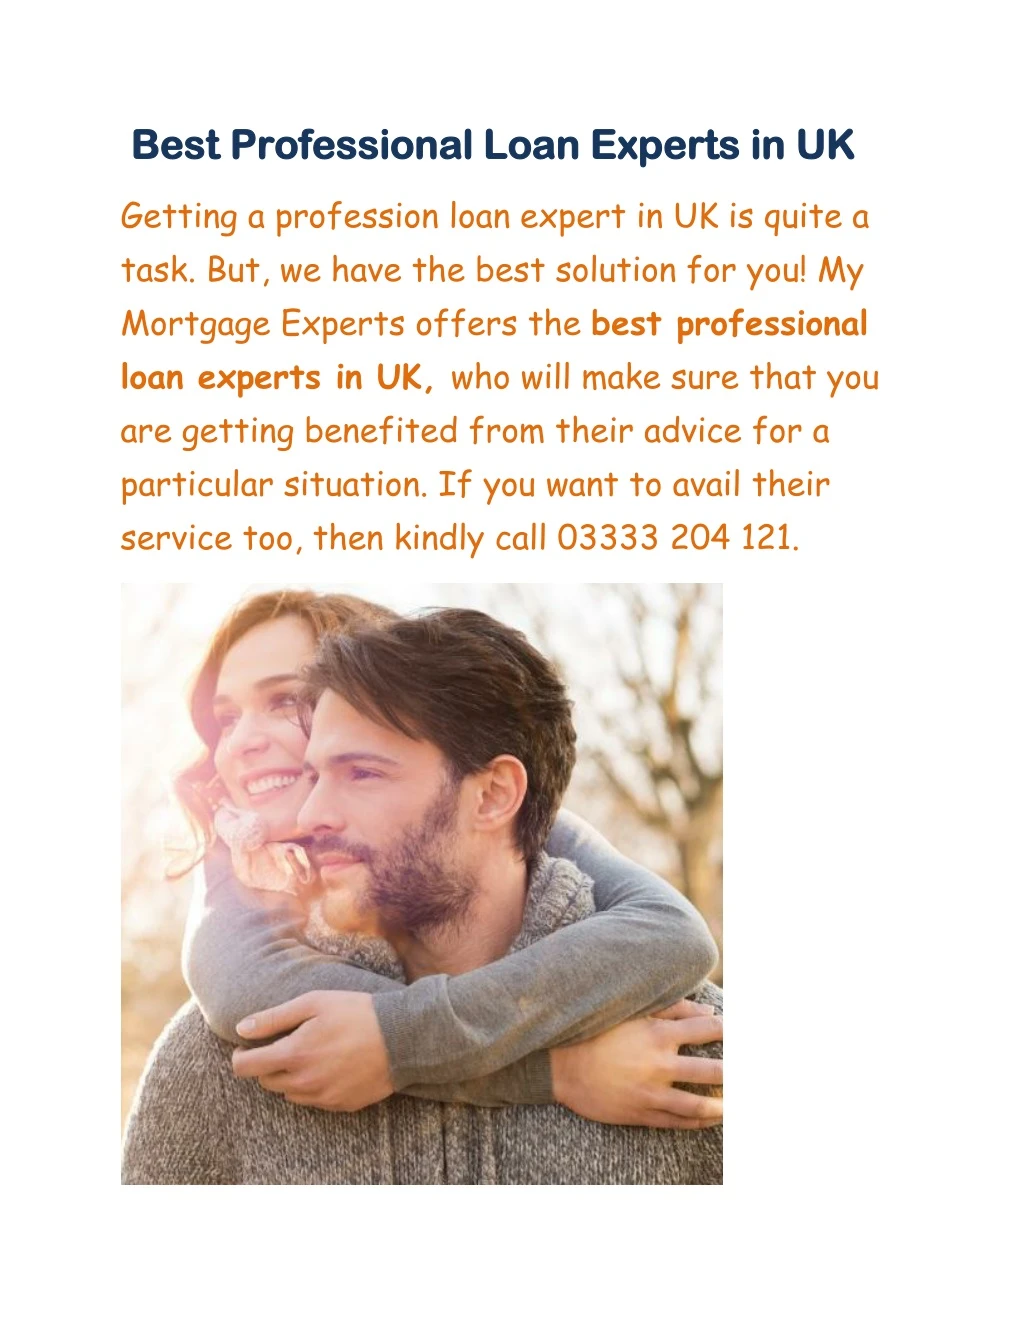 best professional loan experts in uk best